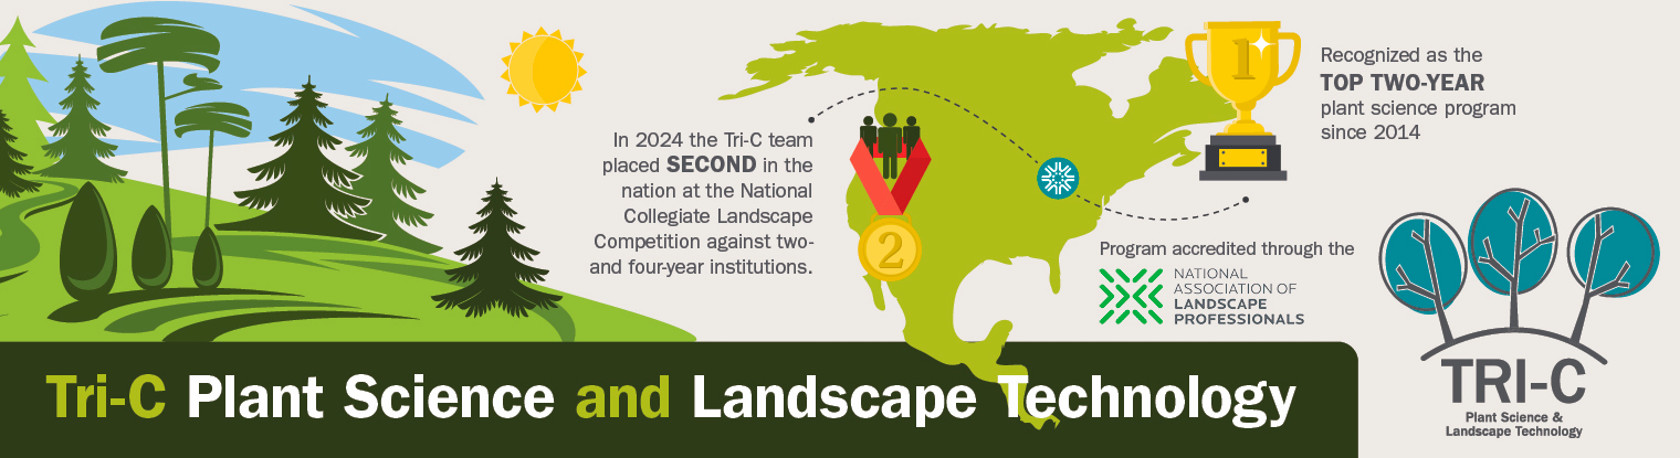 Tri-C Plant Science and Landscape Technology